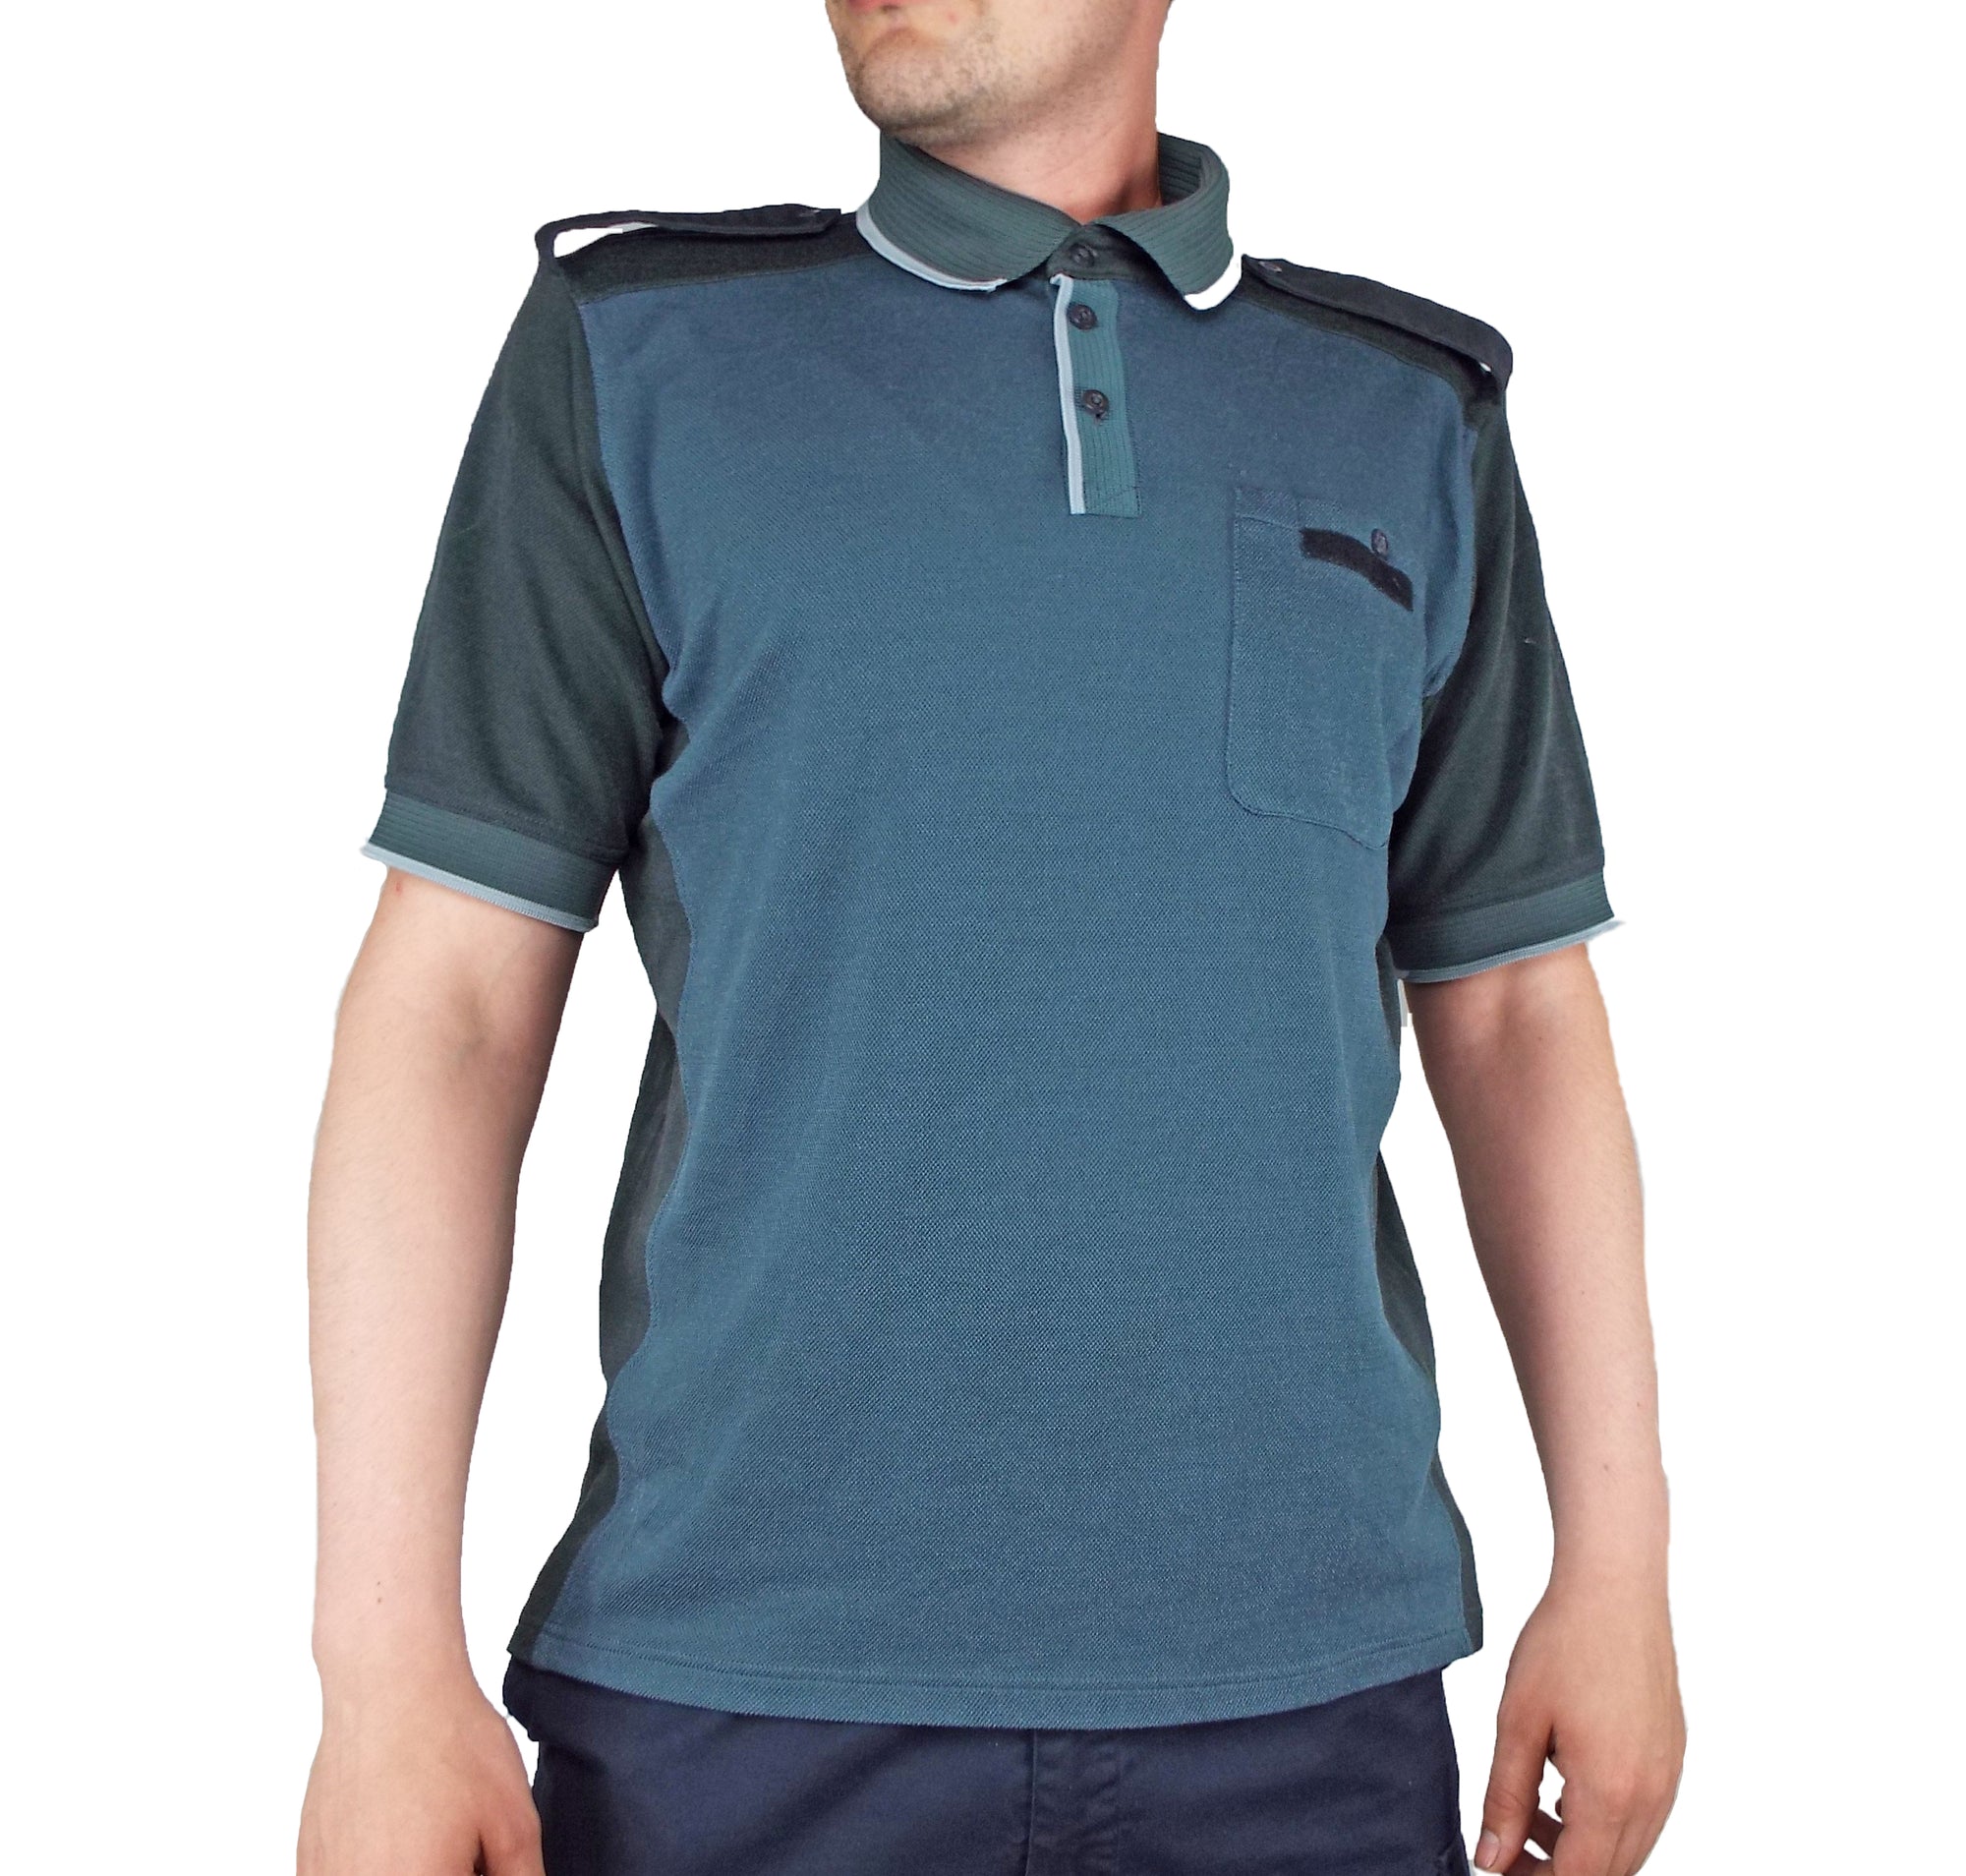 Dutch Customs' officers old uniform - Short-sleeve Grey/Blue Polo Shirt - Sportswool - Unissued